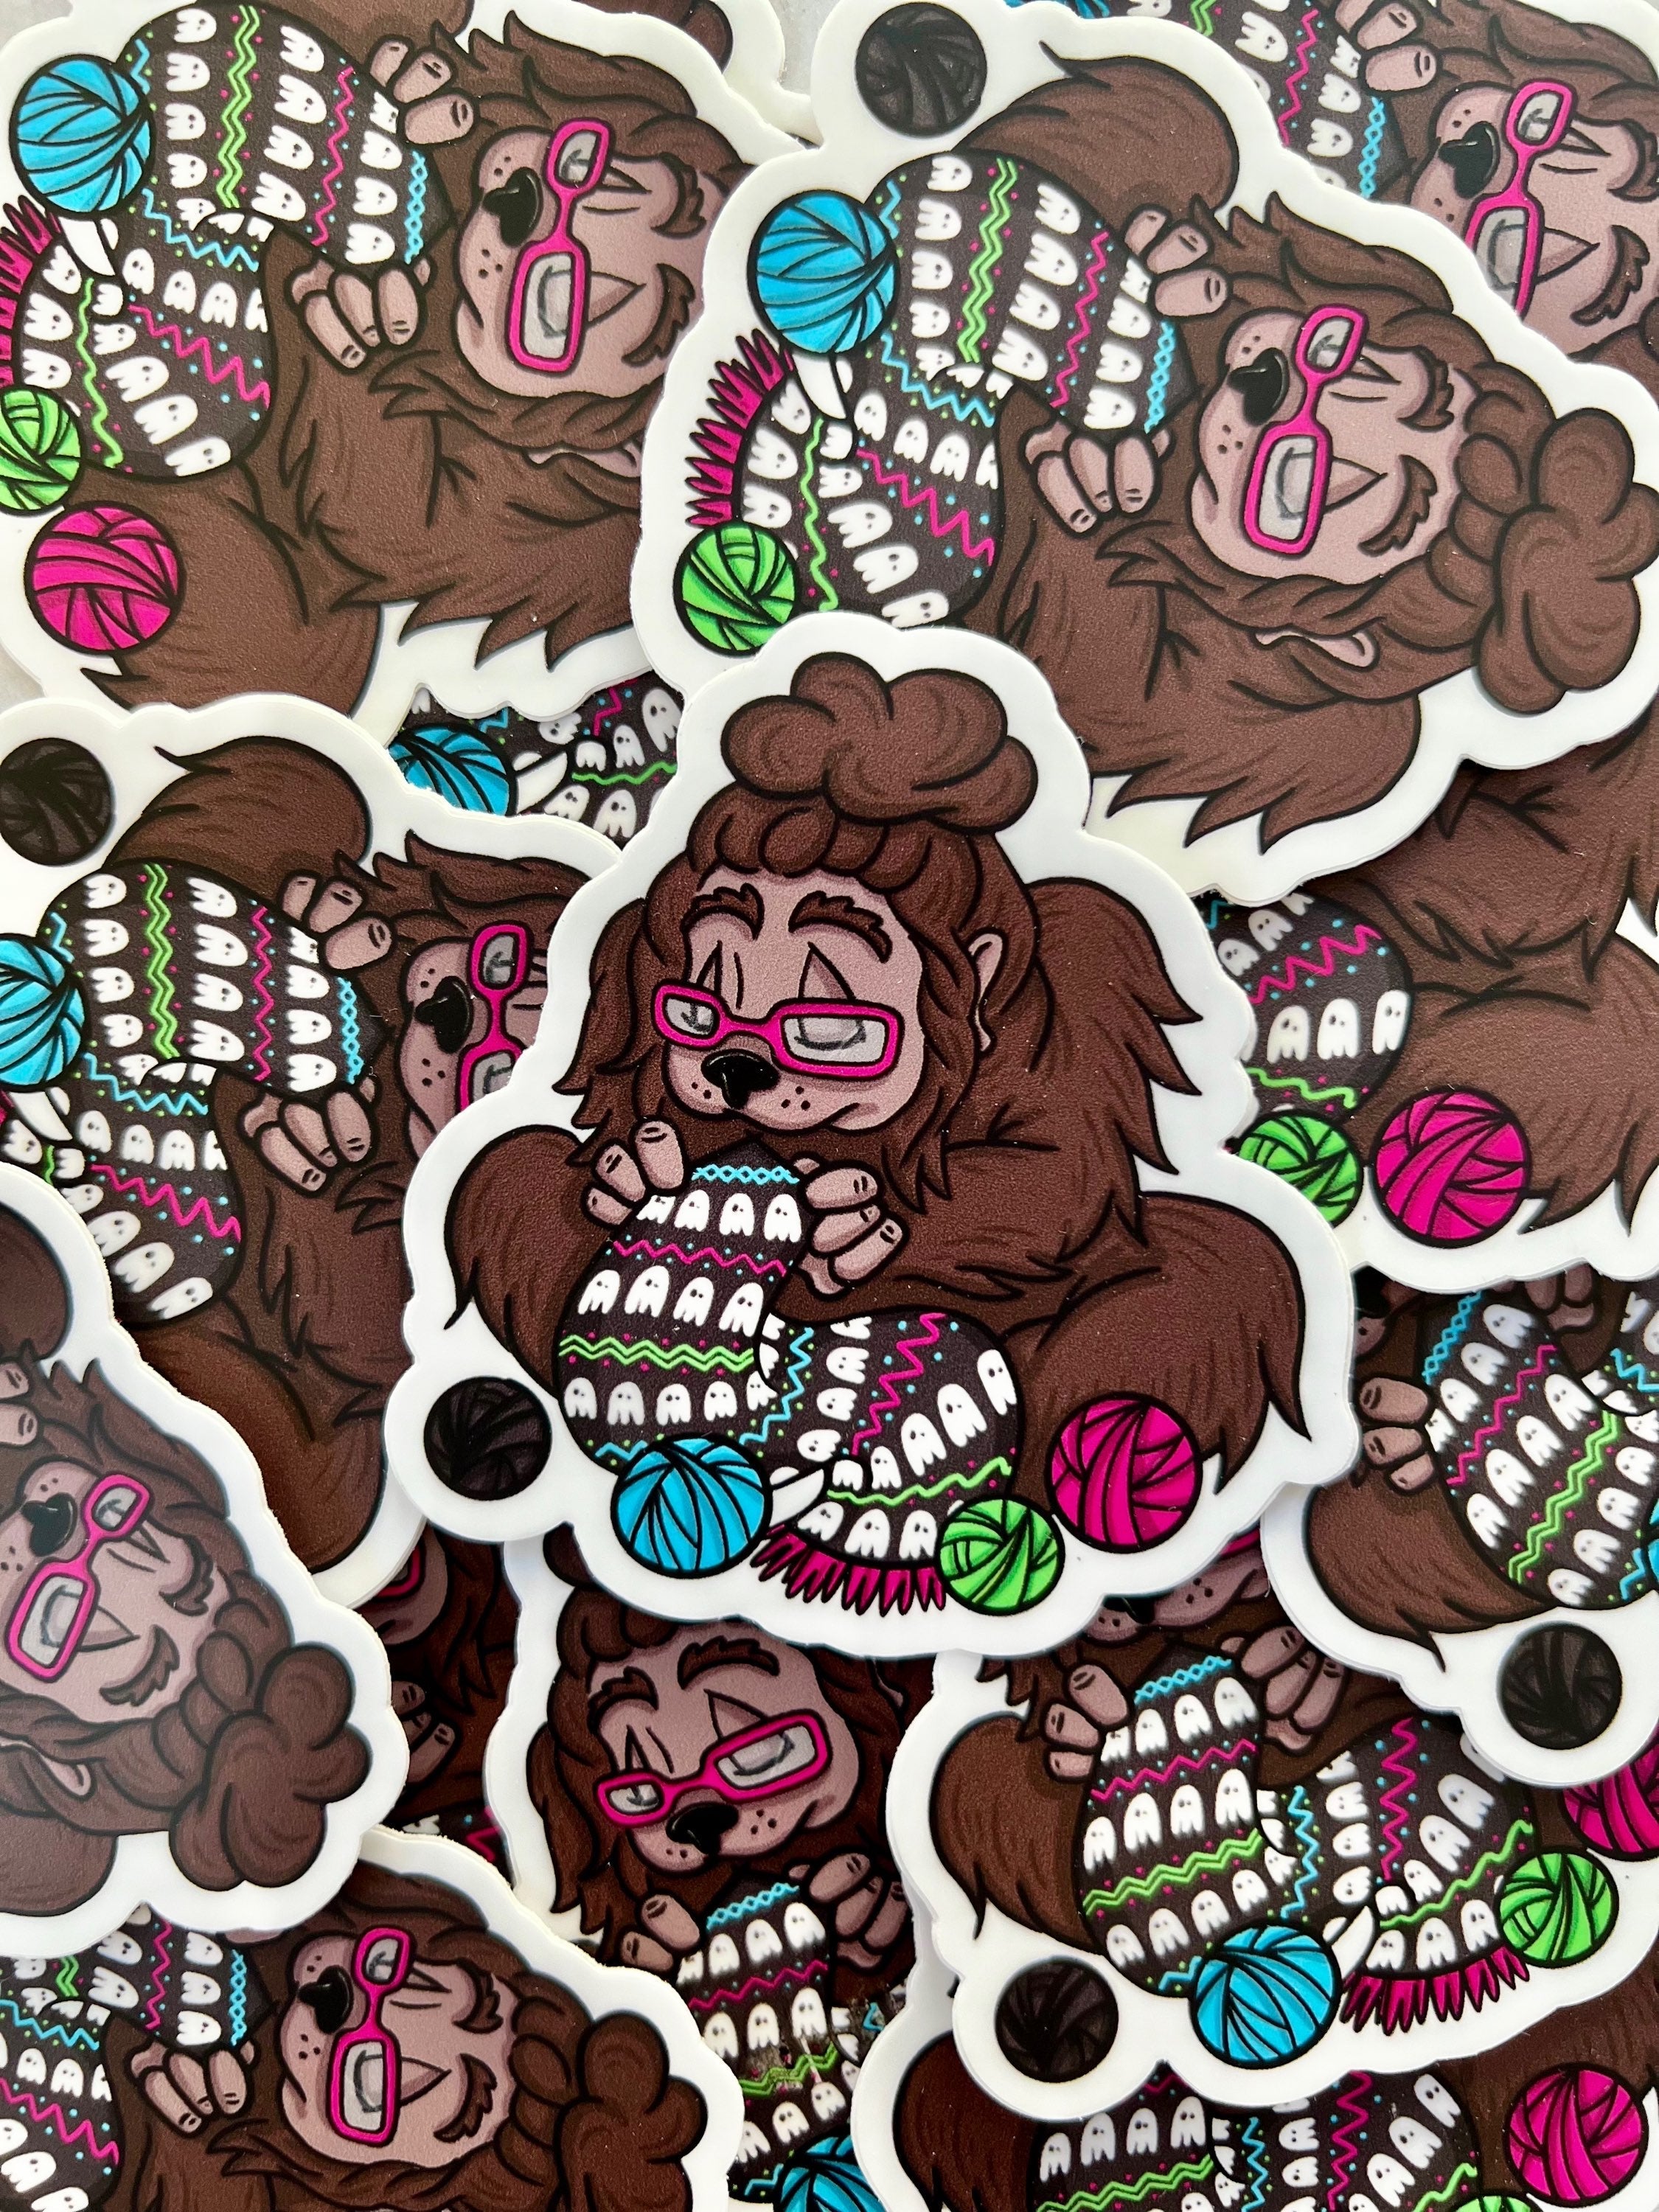 Sticker - Knitting Bigfoot - 3x3in